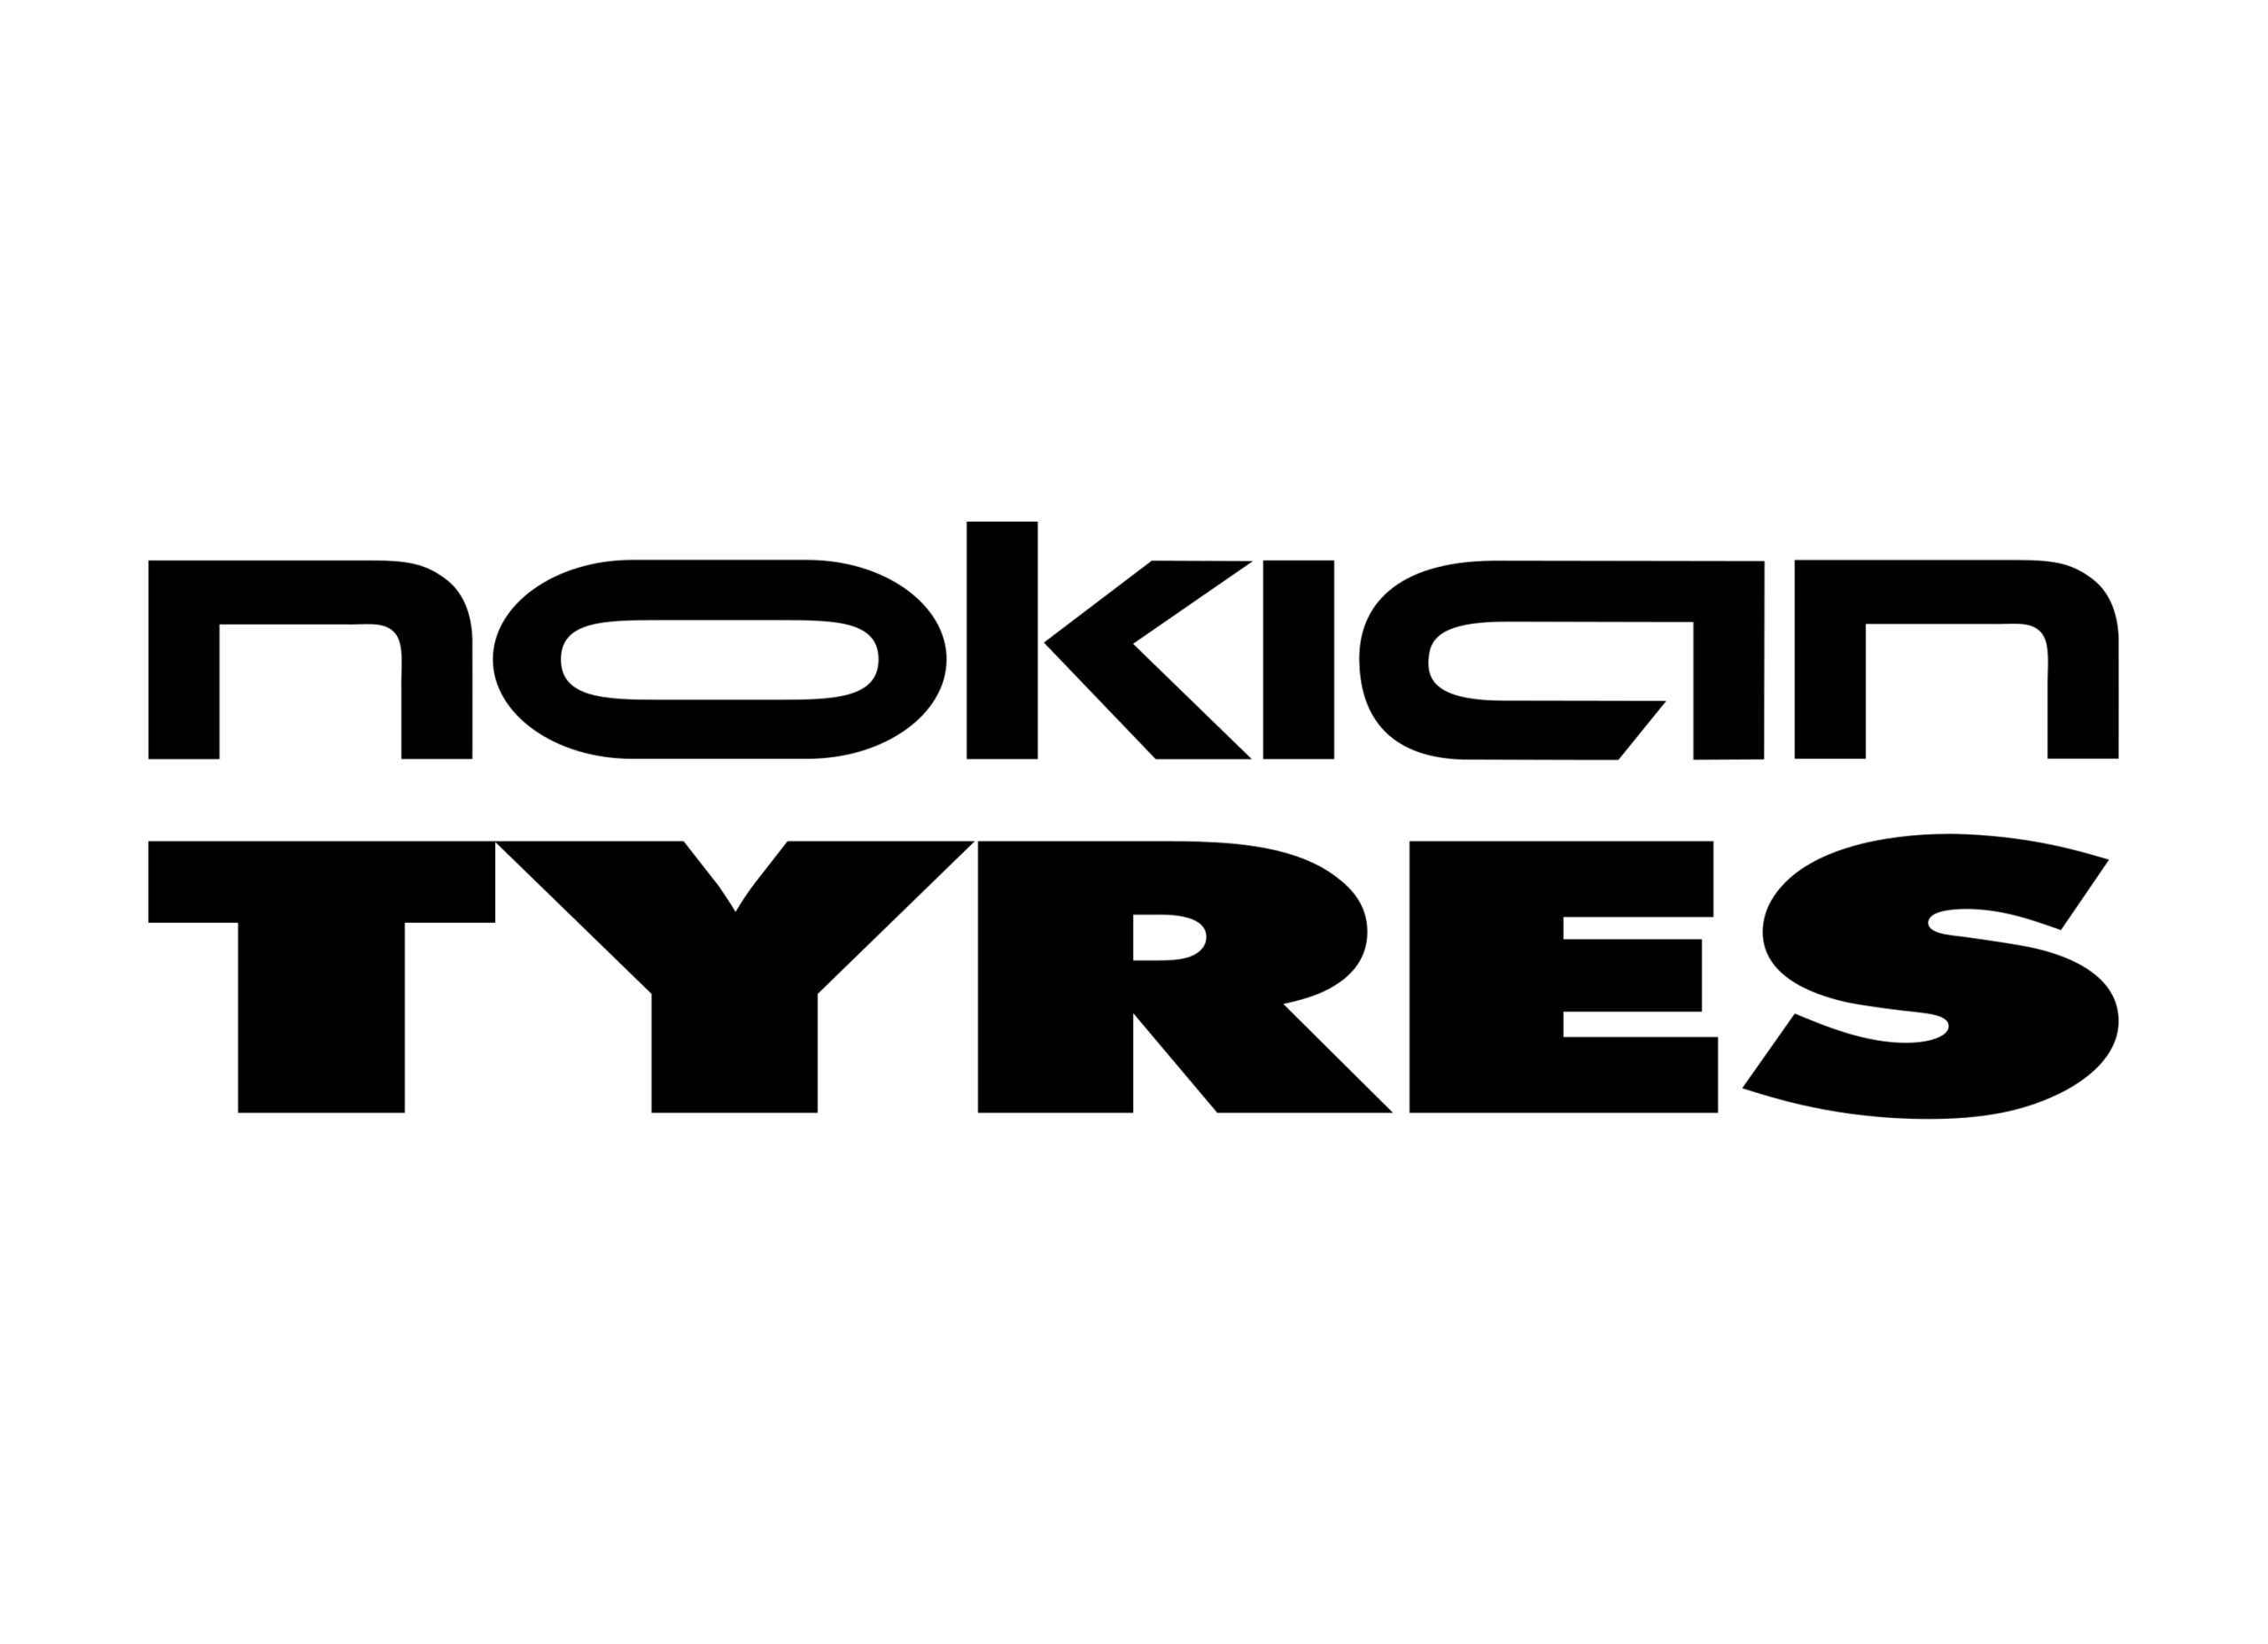 Nokian logo present